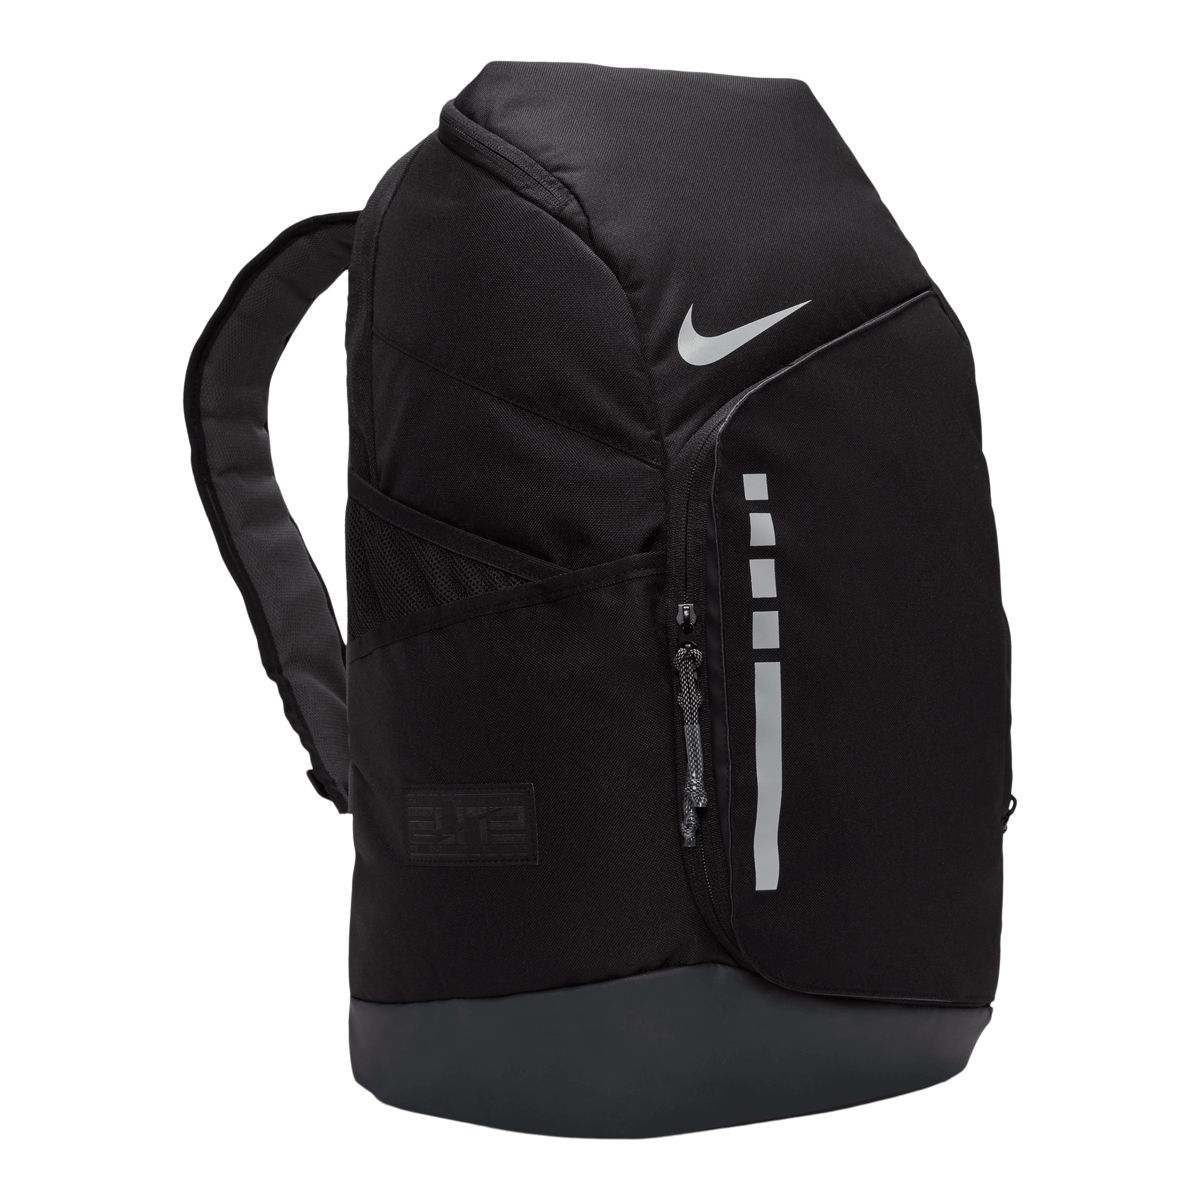 NIKE Backpack Black - Price in India | Flipkart.com